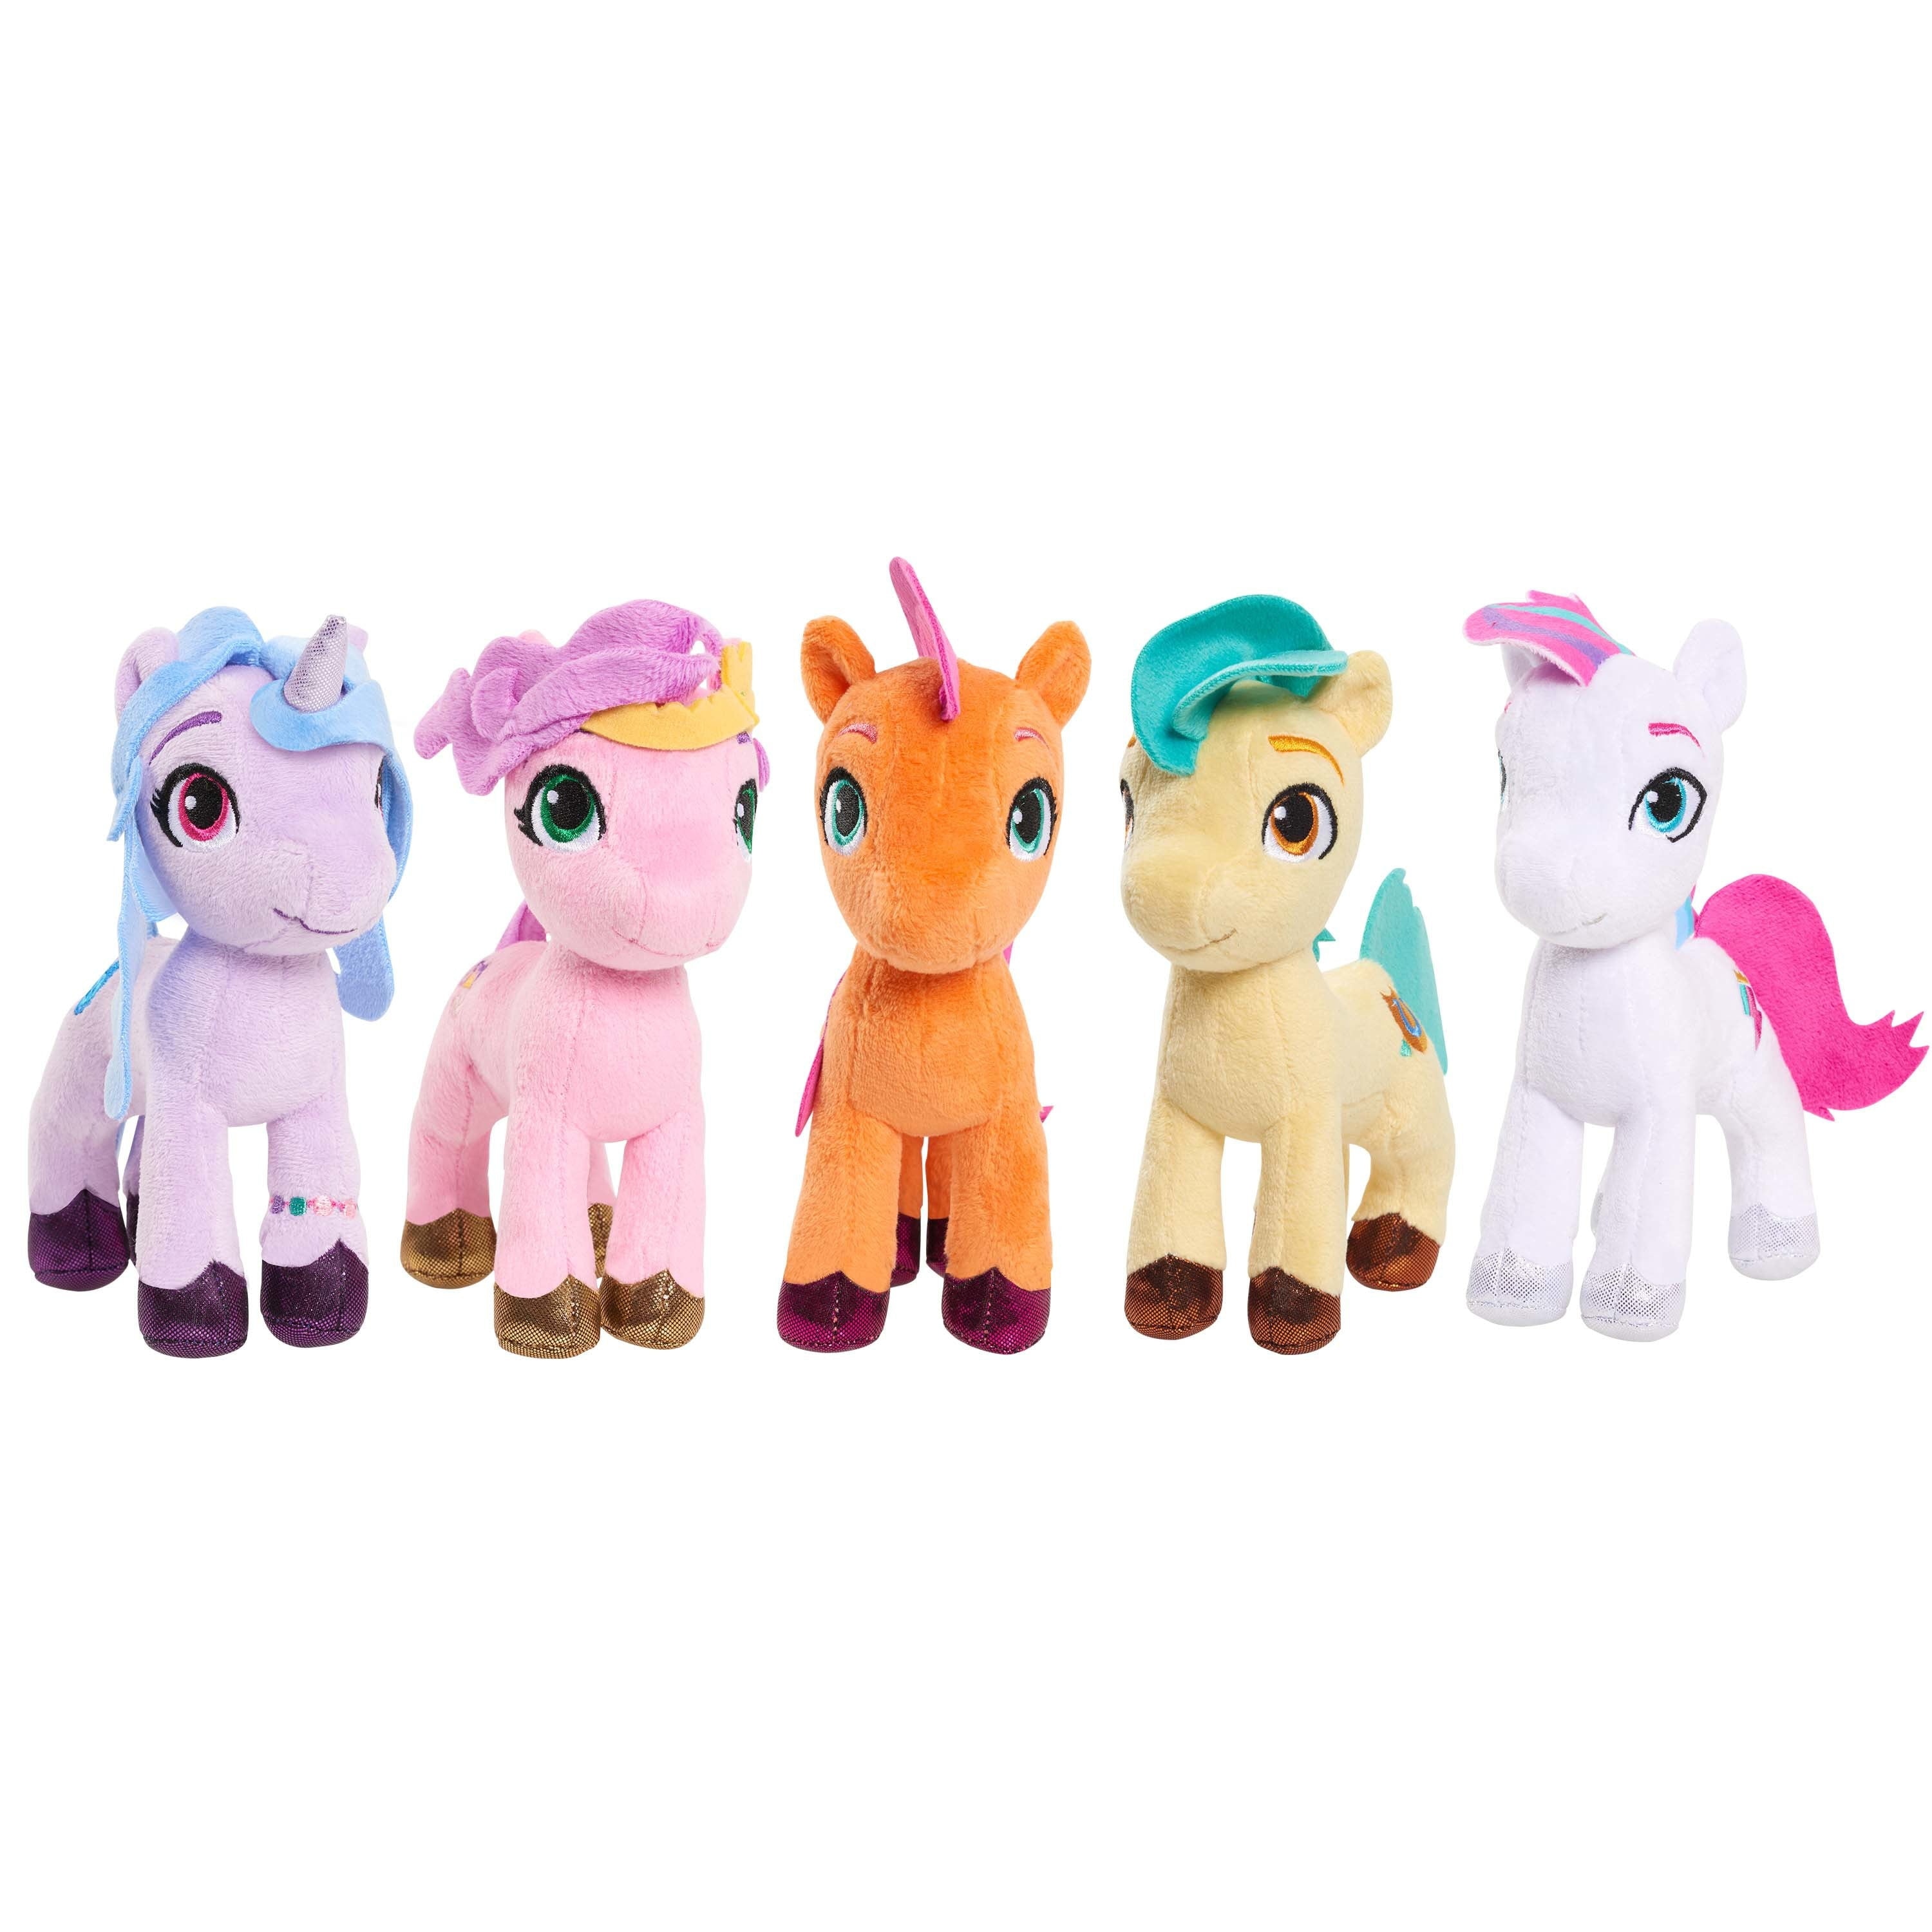 Zipp Storm My little pony plush toy - Inspire Uplift